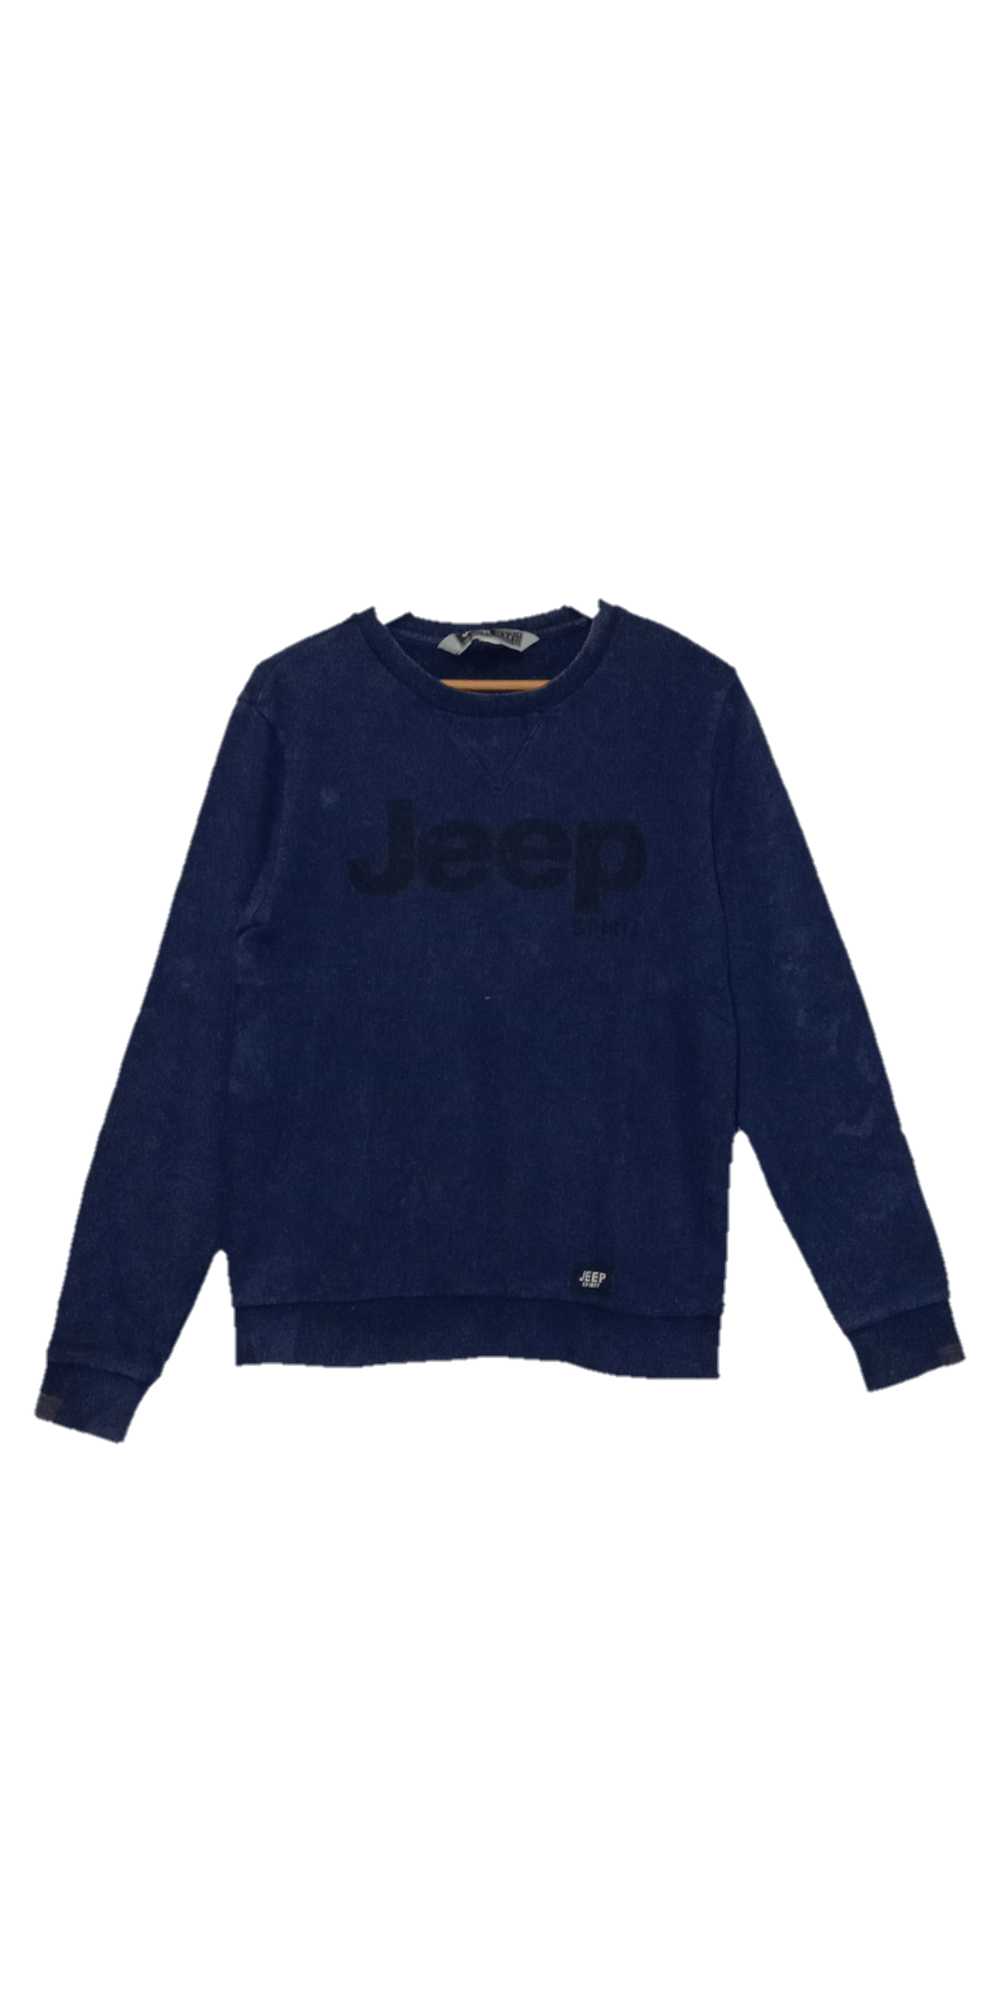 Jeep Jeep Sweatshirt big logo - image 1